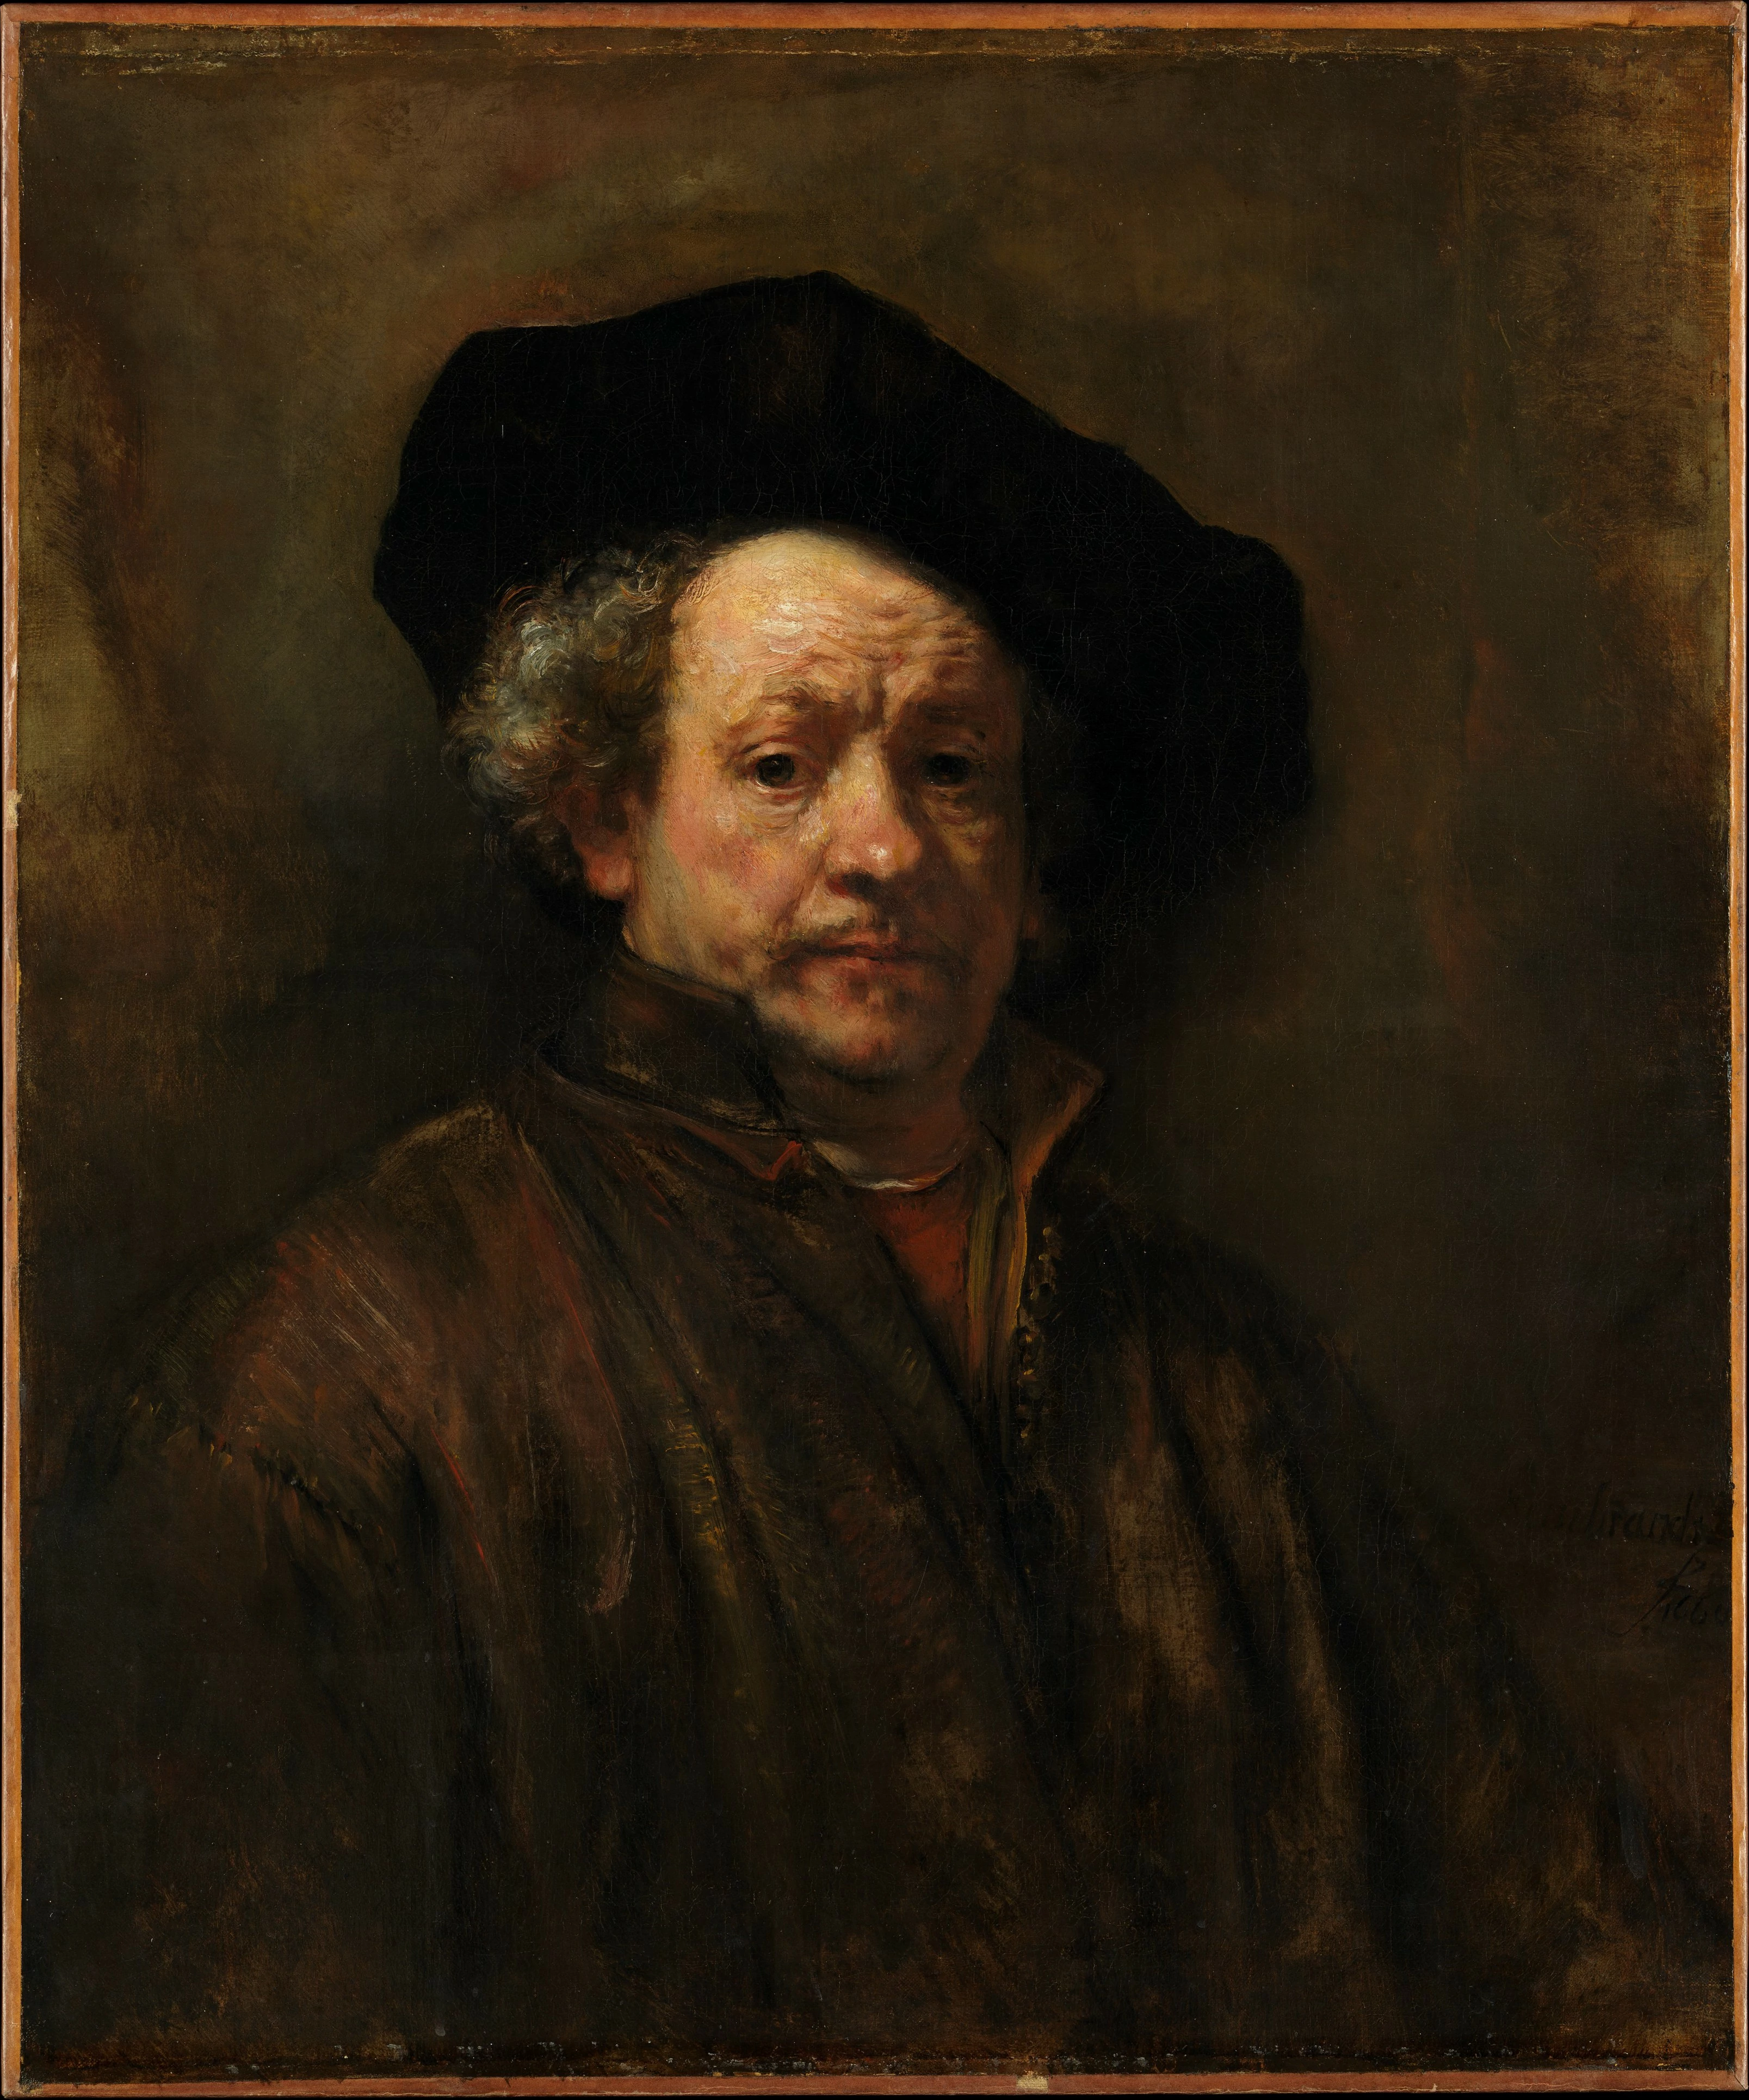 Self-Portrait, Rembrandt van Rijn